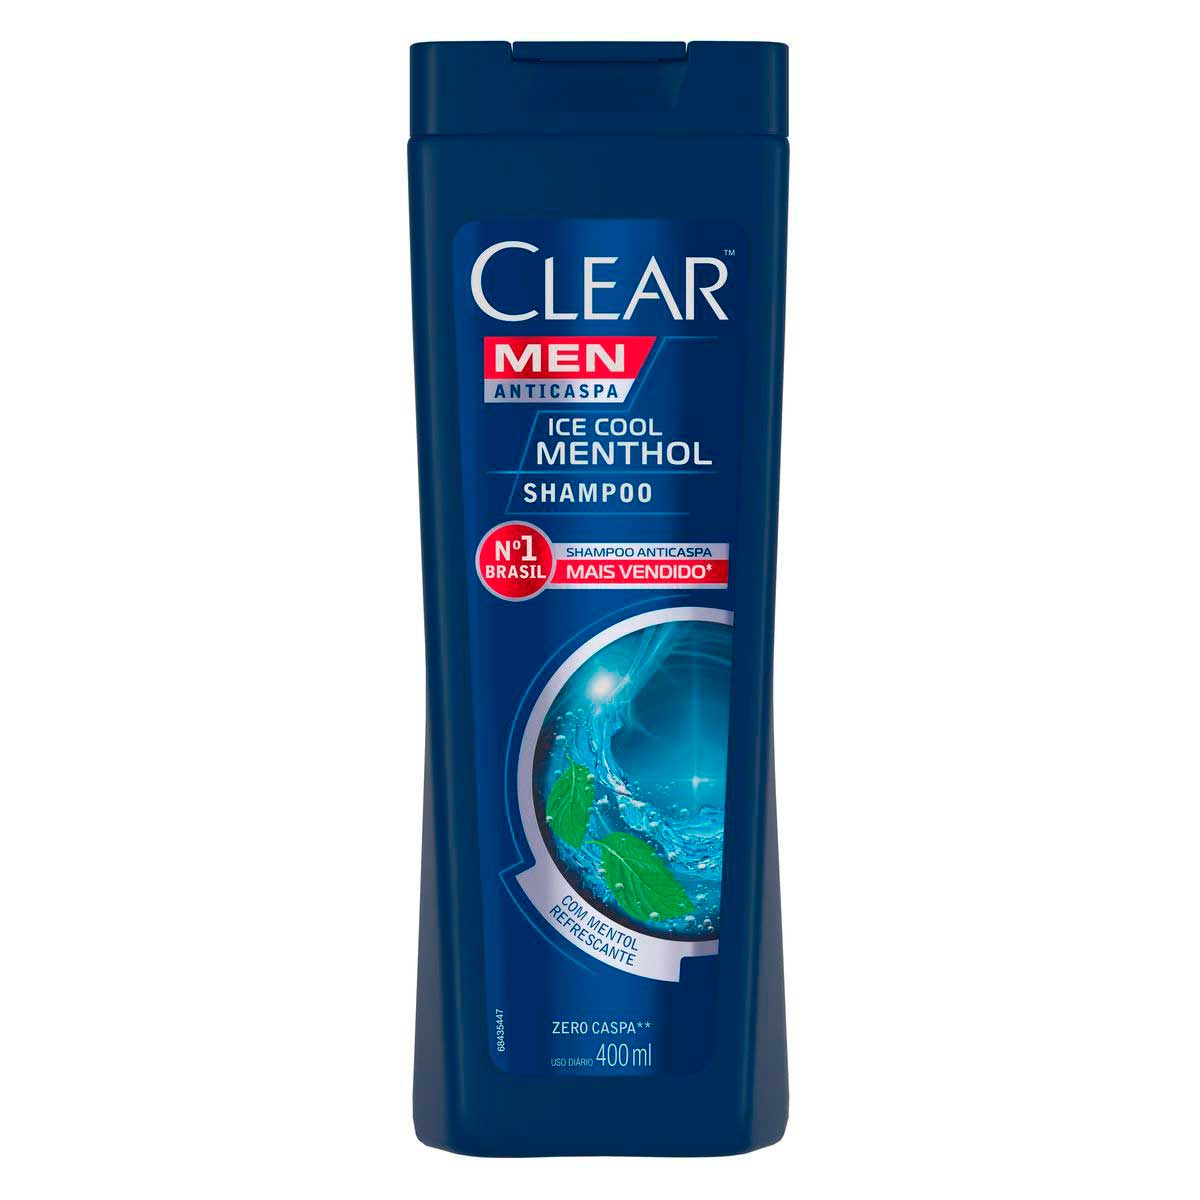 shampoo-anticaspa-clear-men-ice-cool-menthol-400ml-1.jpg